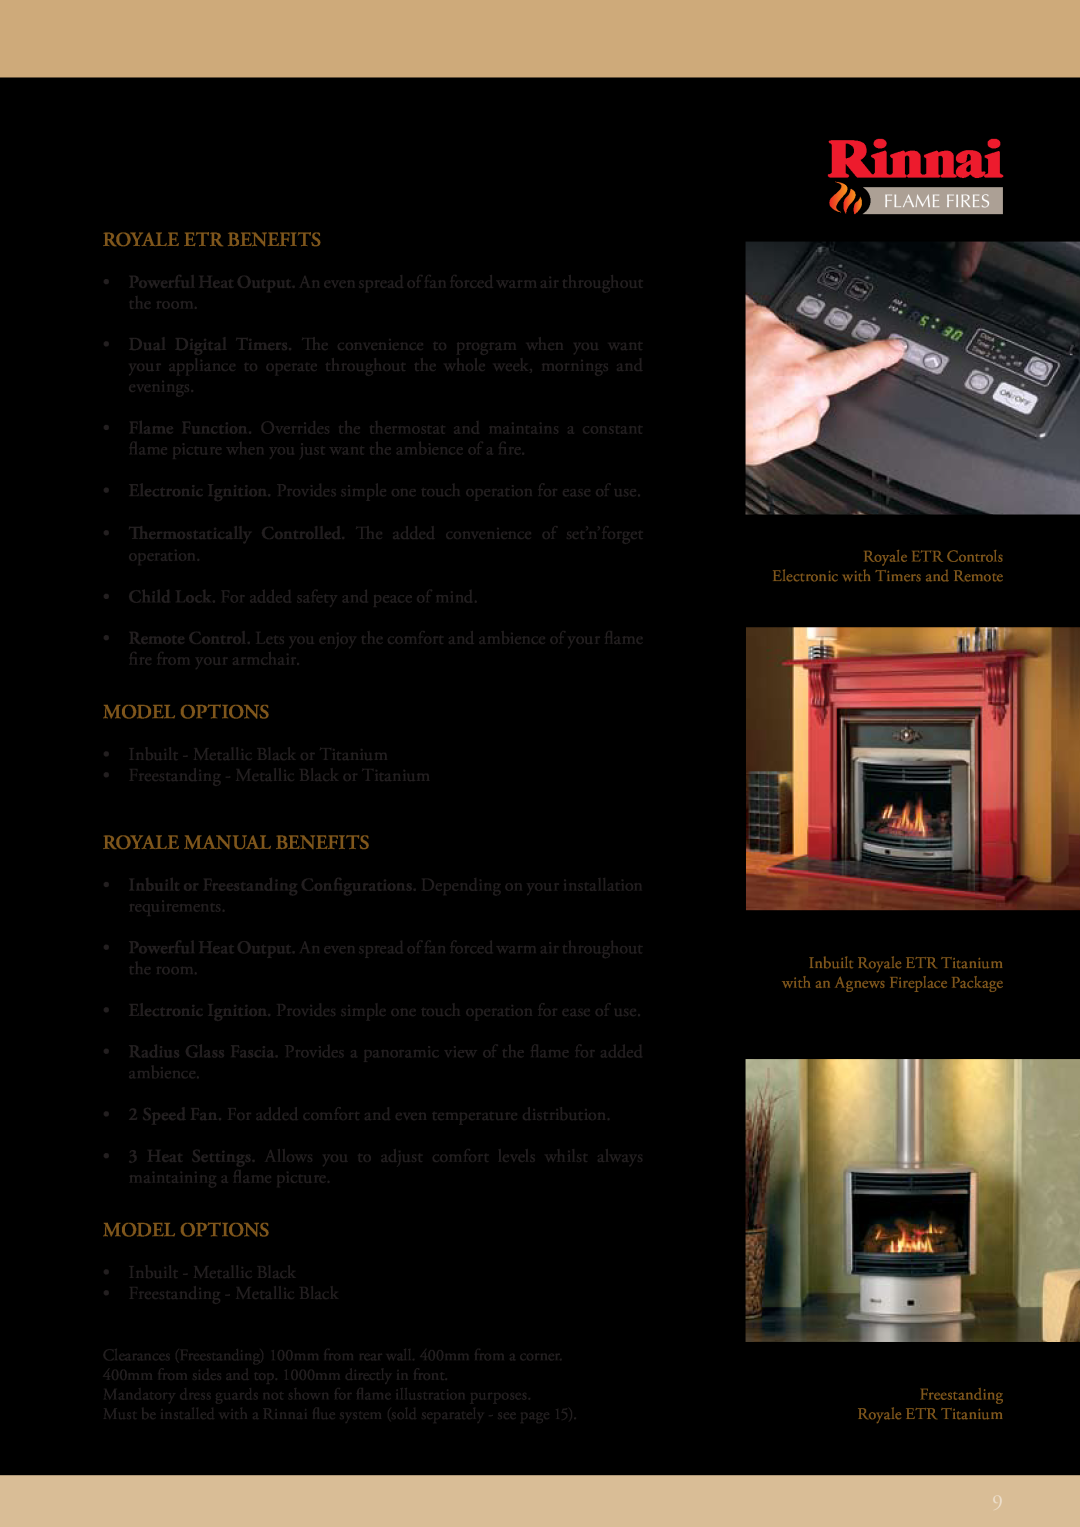 Rinnai FLAME FIRES manual ROYALE ETR Benefits, Model Options, ROYALE MANUAL Benefits, Flame Fires 